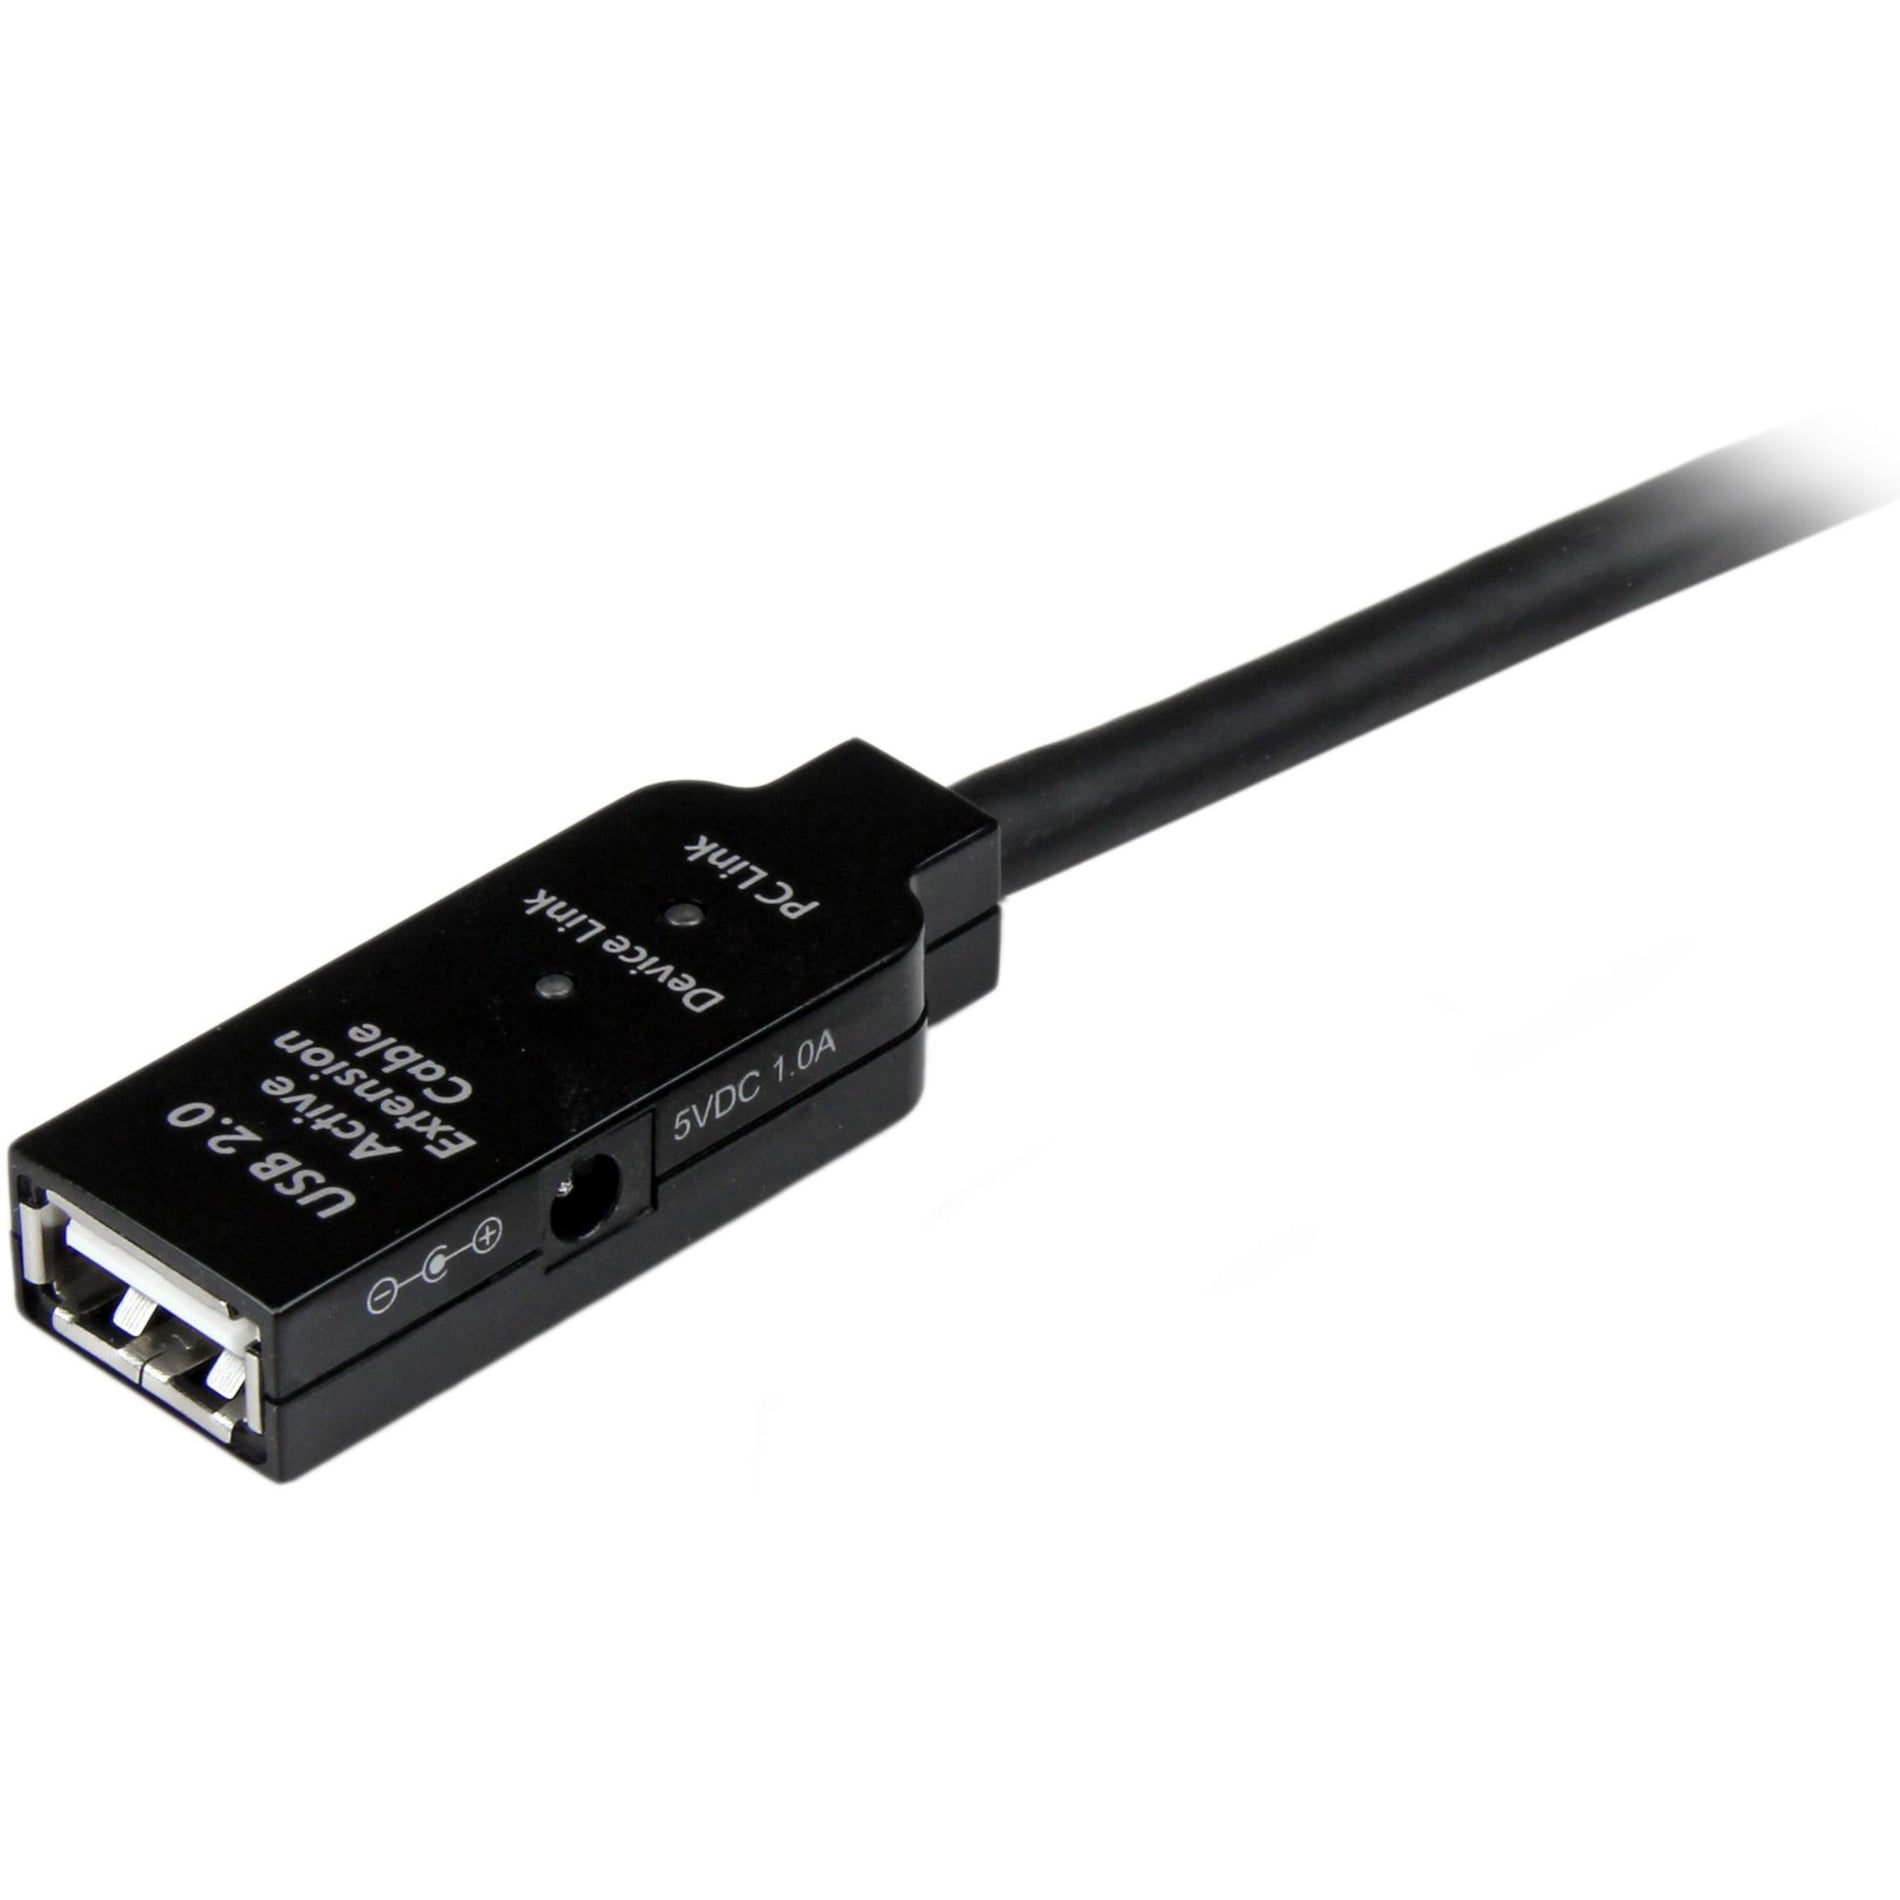 StarTech.com USB2AAEXT25M 25m USB 2.0 Active Extension Cable - M/F, 82.02 ft Data Transfer Cable, 480 Mbit/s, Black